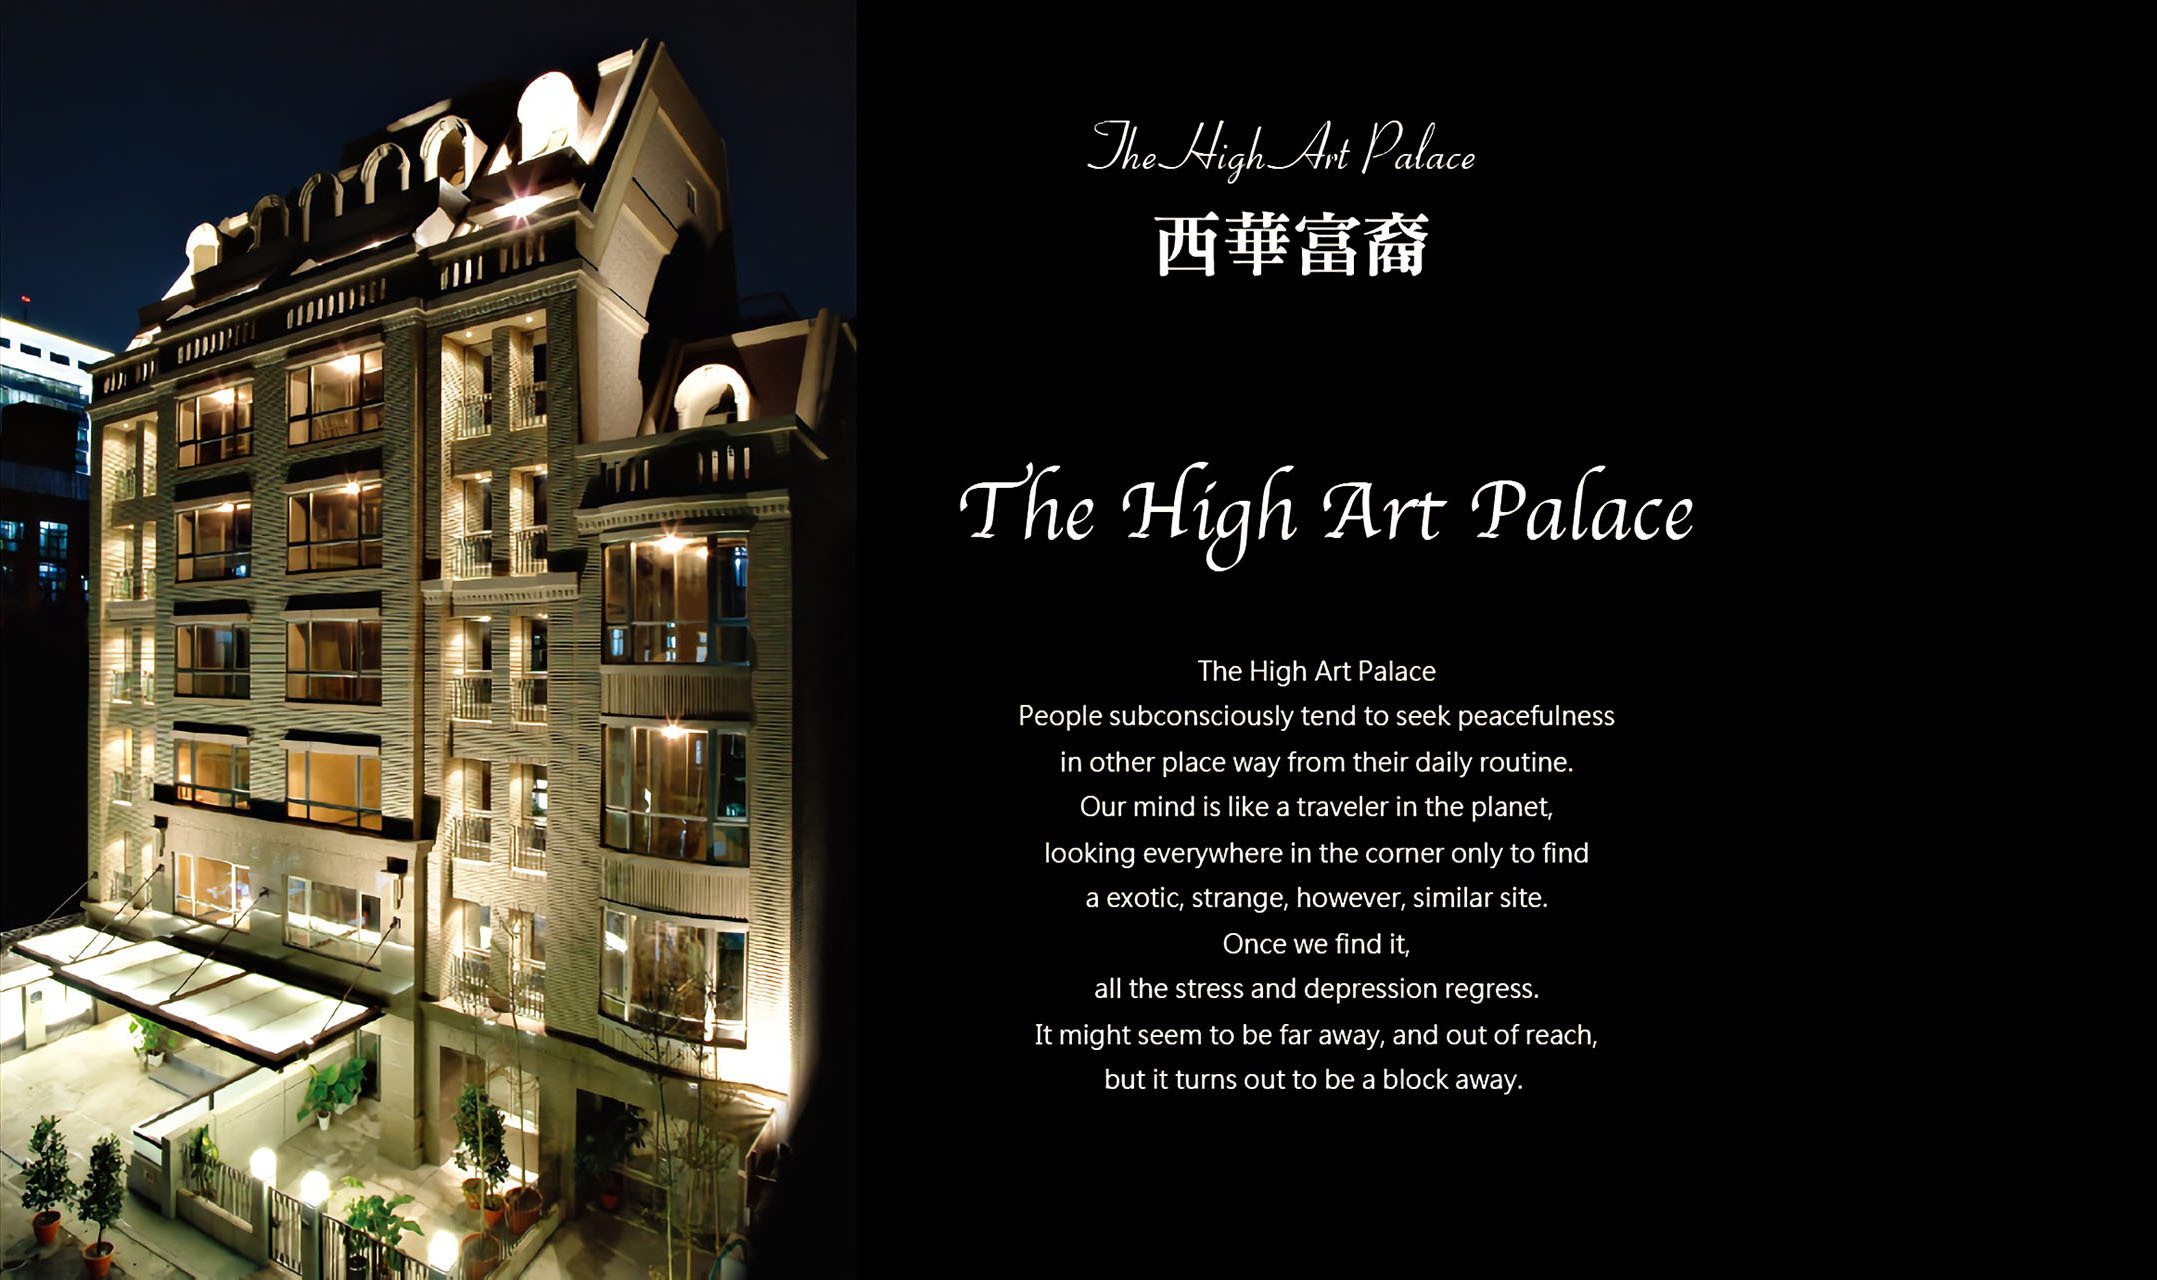 The High Art Palace